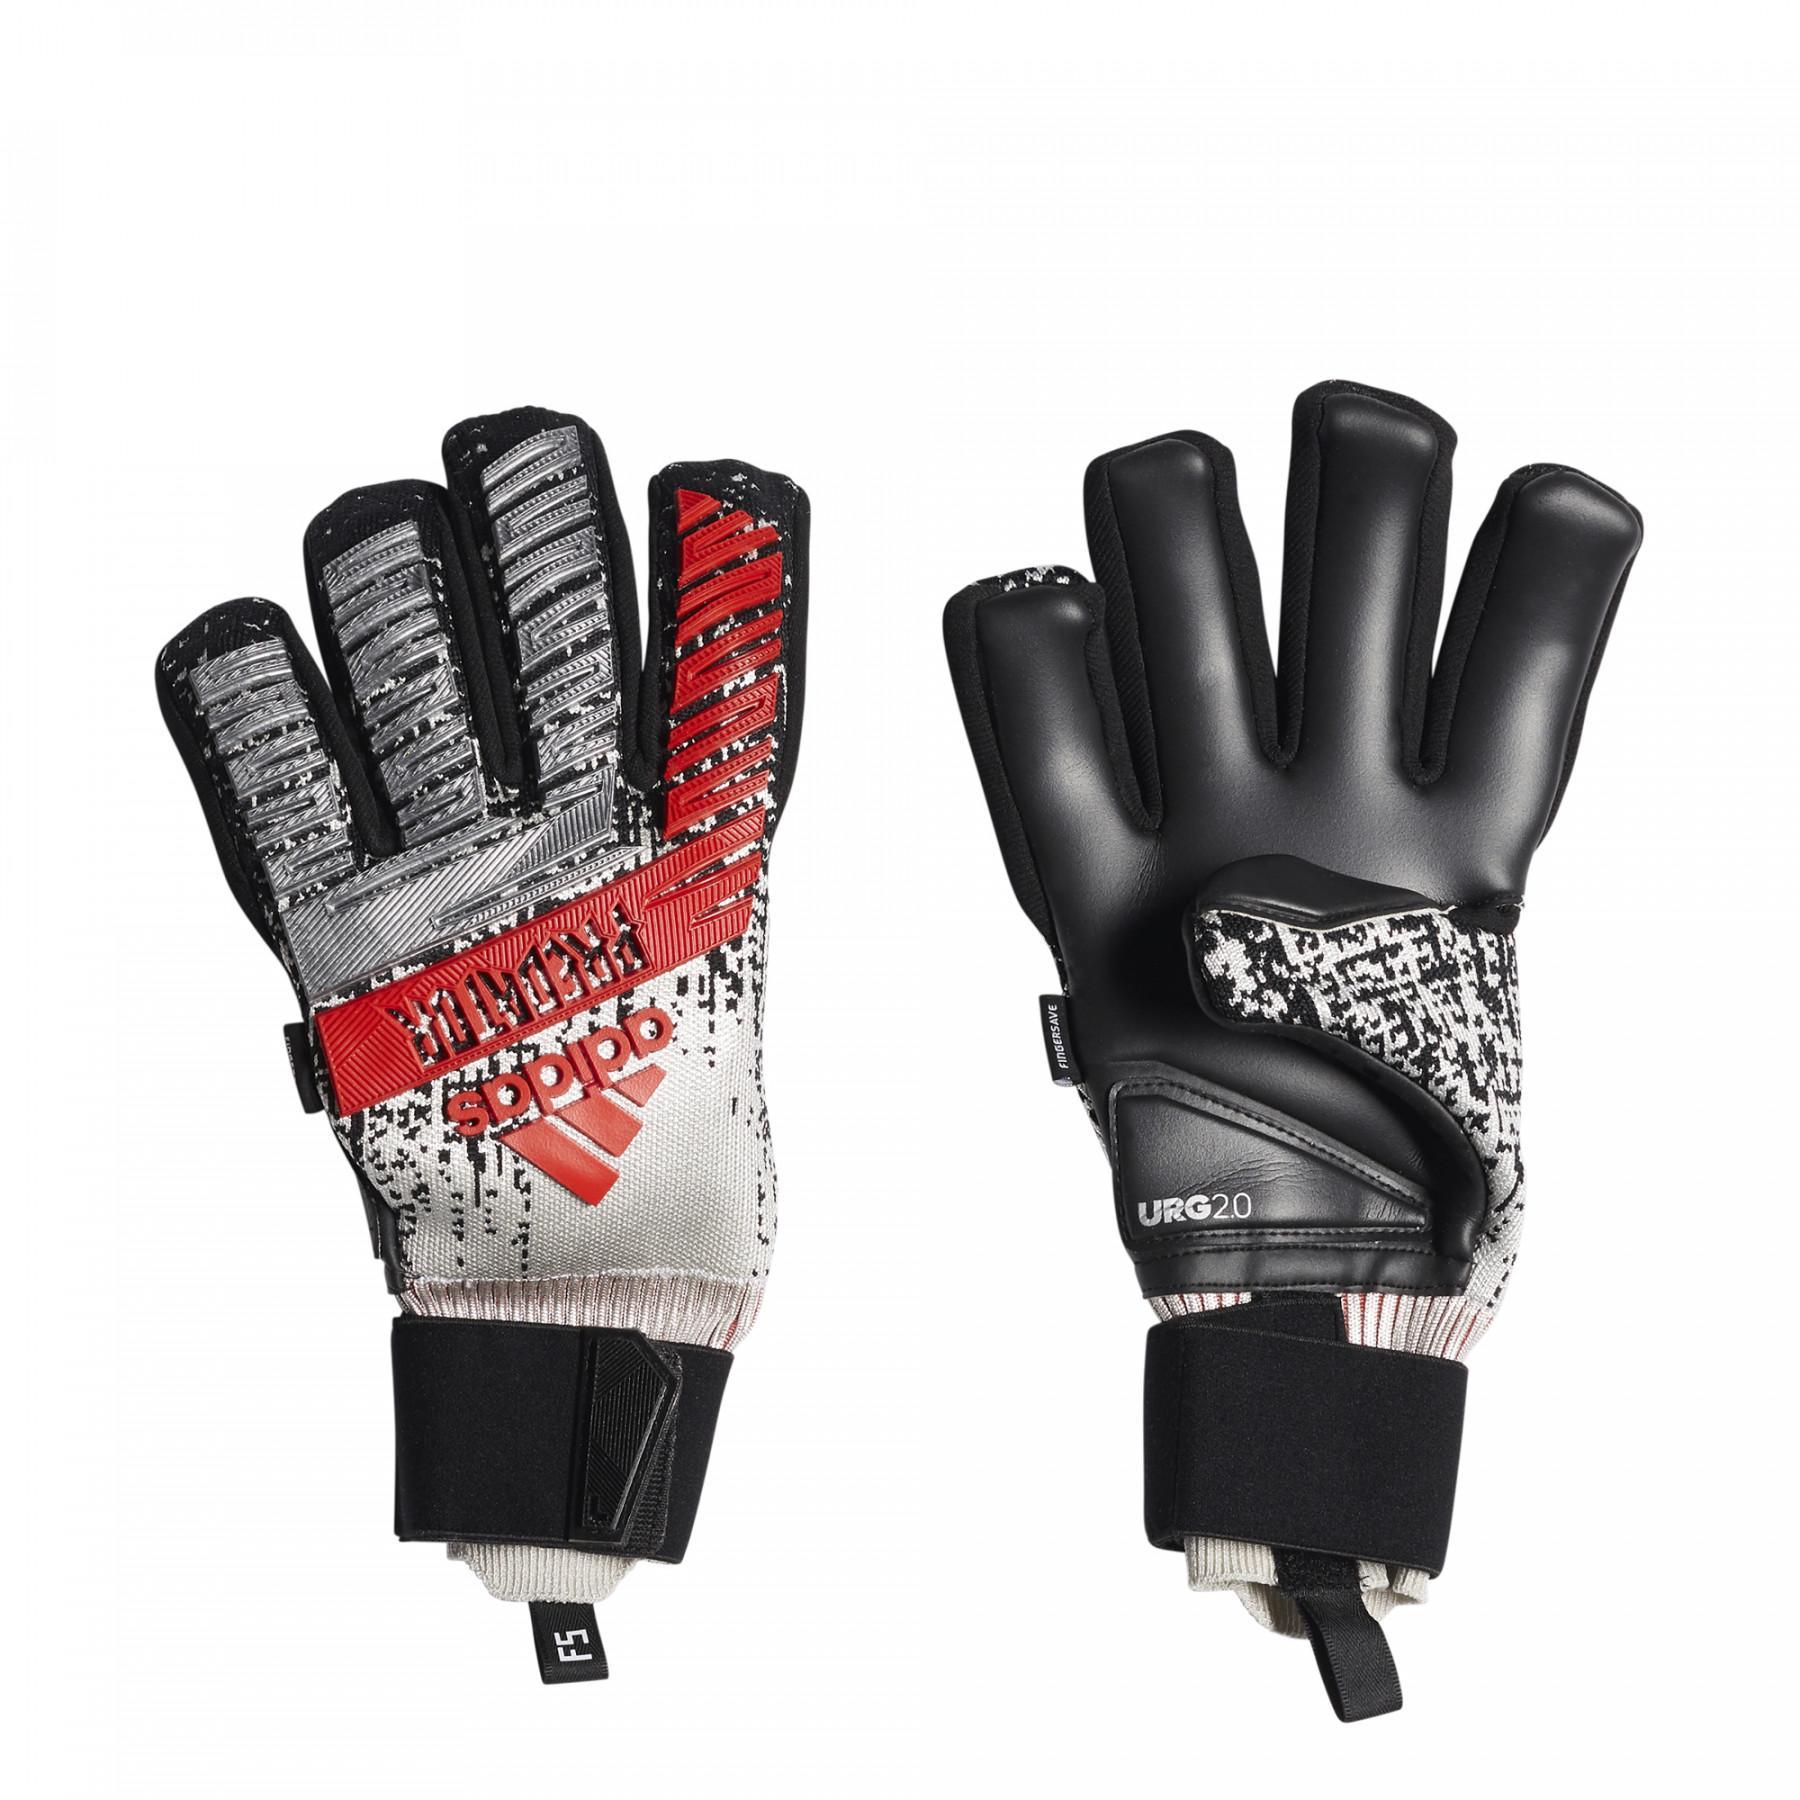 Goalkeeper gloves adidas Predator Pro Fingersave